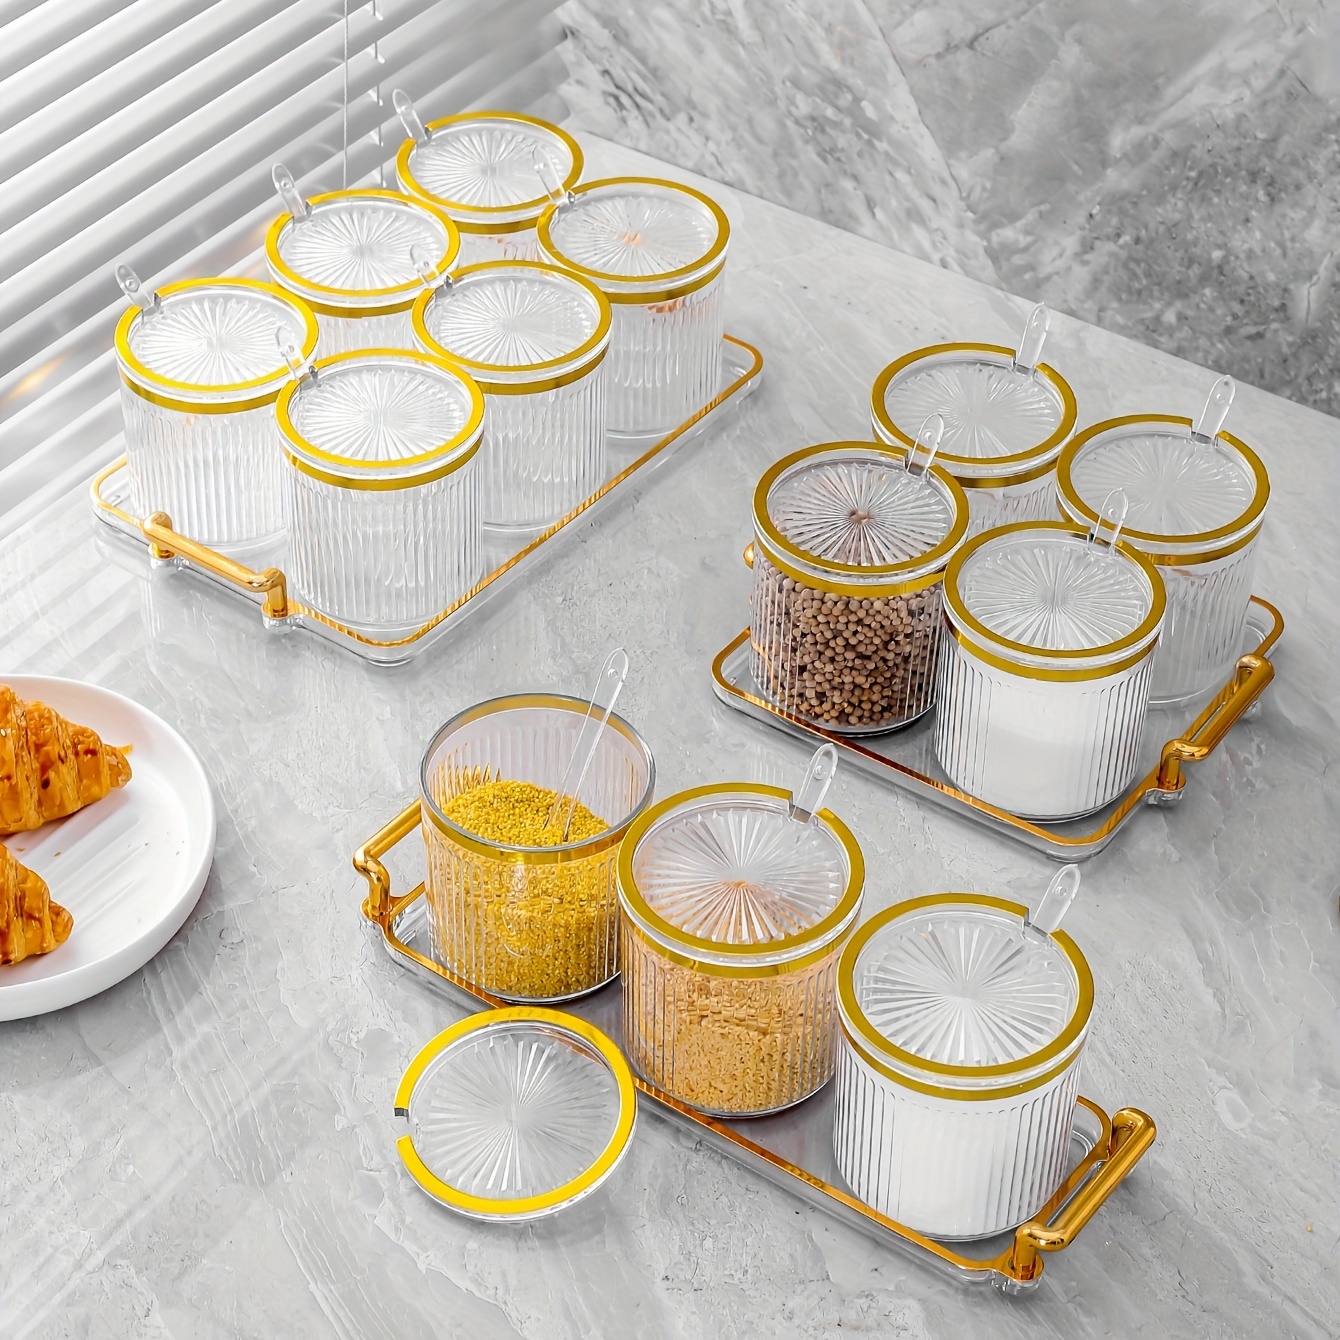 1set 300ml Kitchen Glass Jar Set For Salt, Sugar And Other Spices